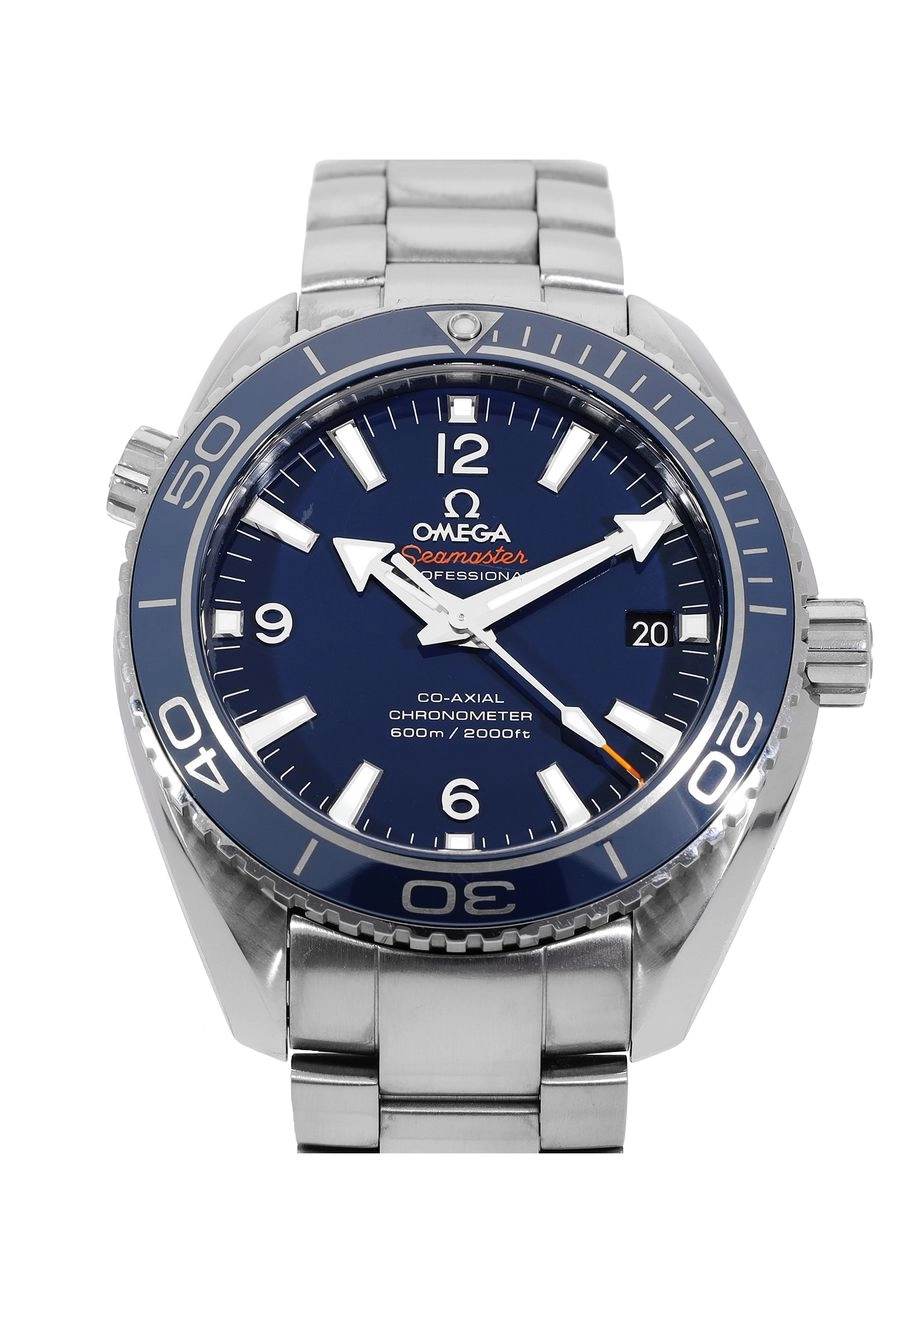 OMEGA Seamaster Planet Ocean Chronographe Co-Axial Chronometer